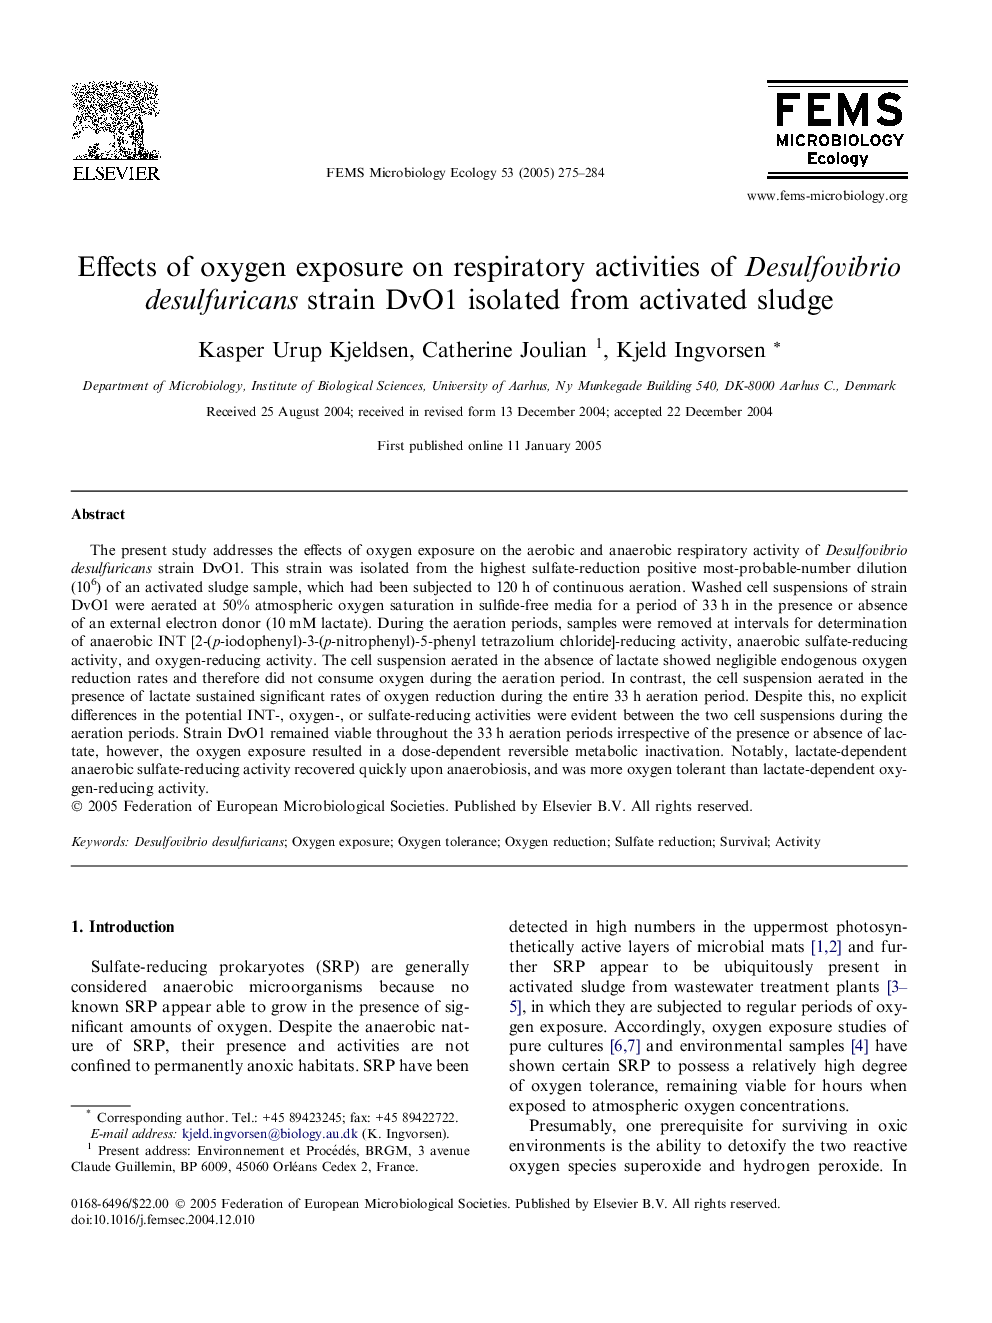 Effects of oxygen exposure on respiratory activities of Desulfovibrio desulfuricans strain DvO1 isolated from activated sludge